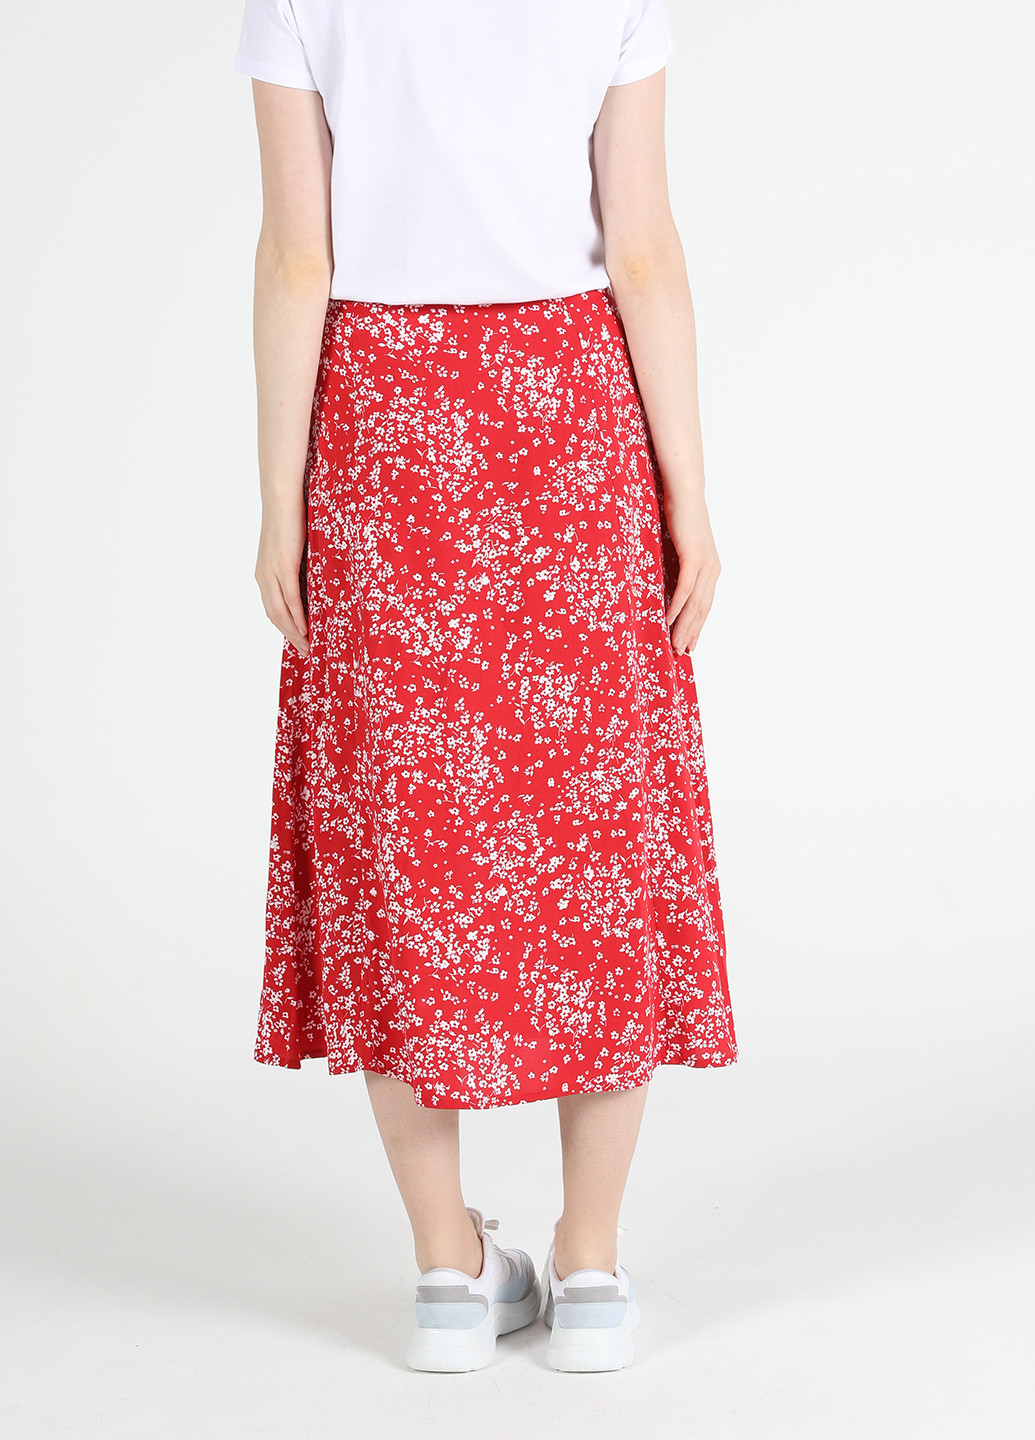 Красная кэжуал цветочной расцветки юбка Colin's а-силуэта (трапеция)